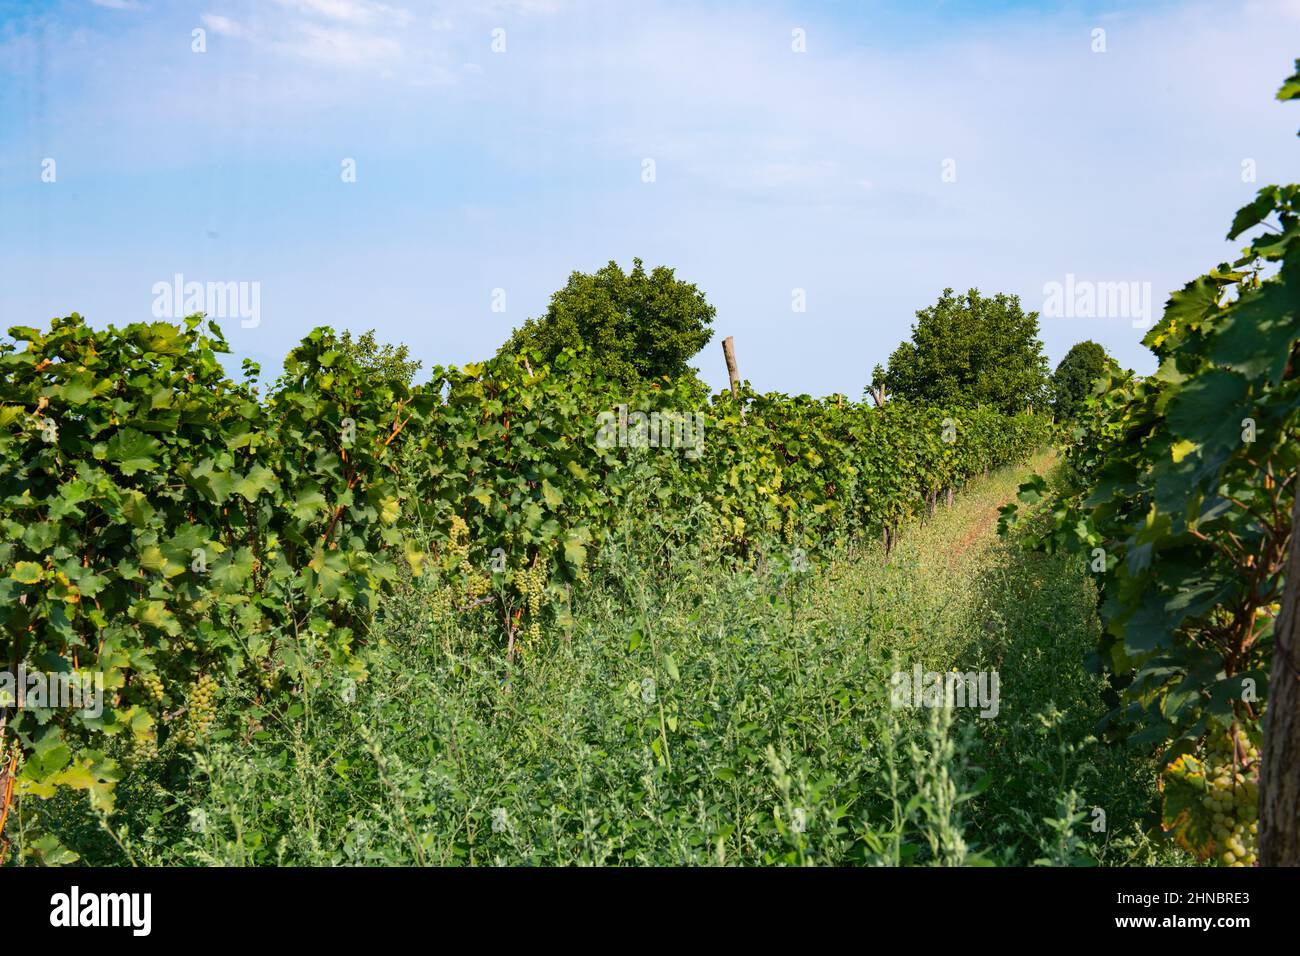 huge vineyard field in the suburbs of georgia Stock Photo